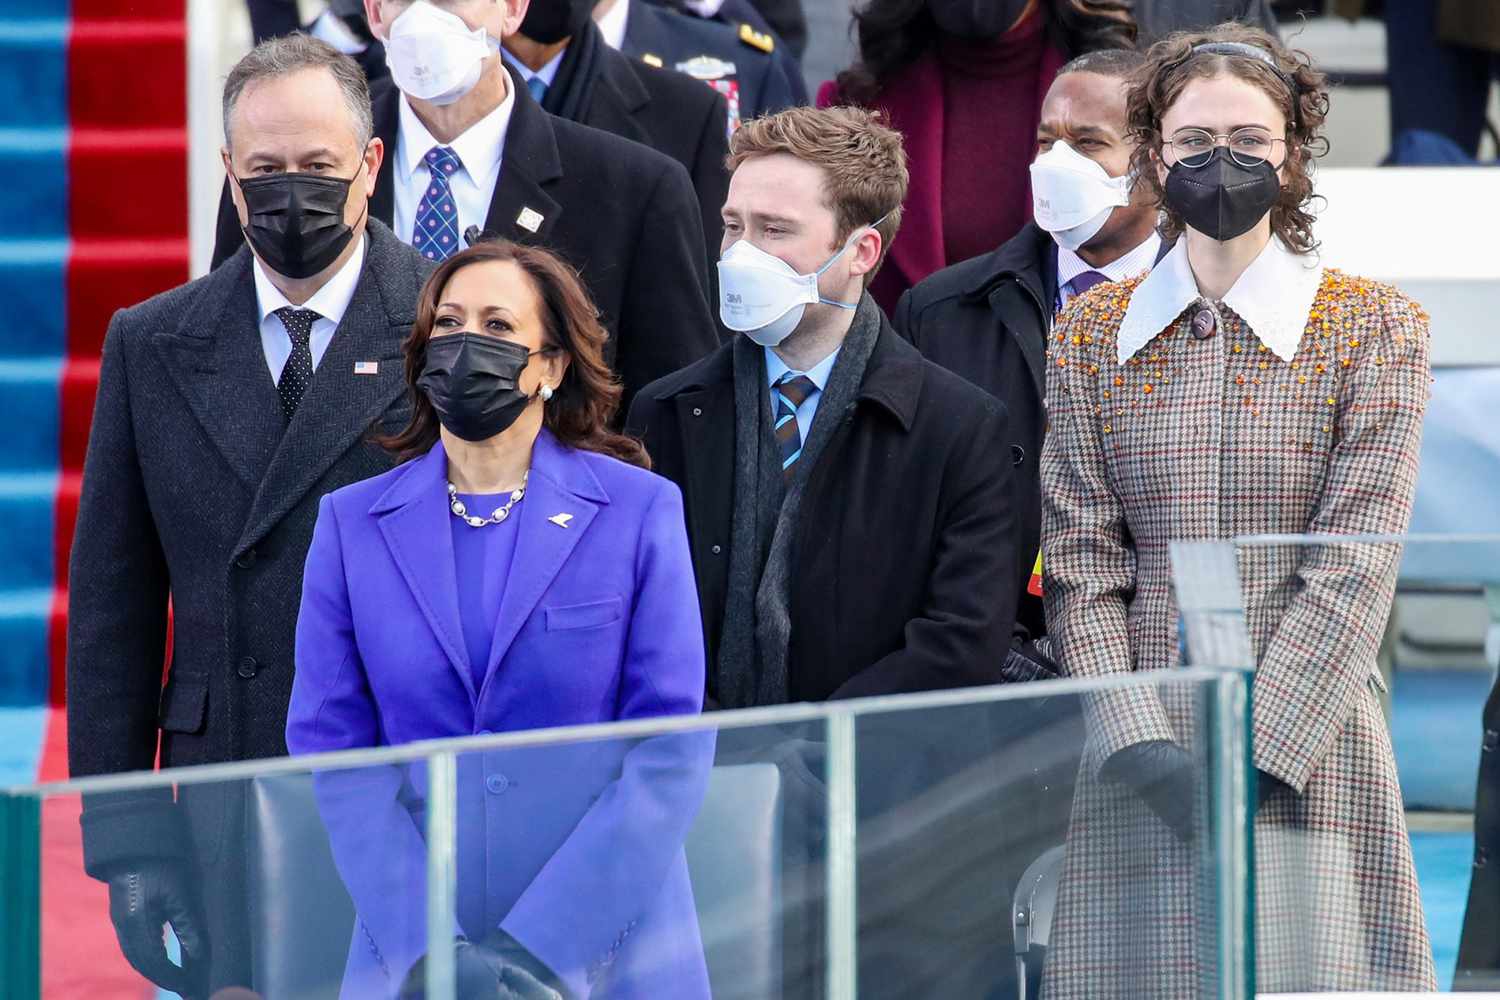 Kamala Harris with her family at inauguration